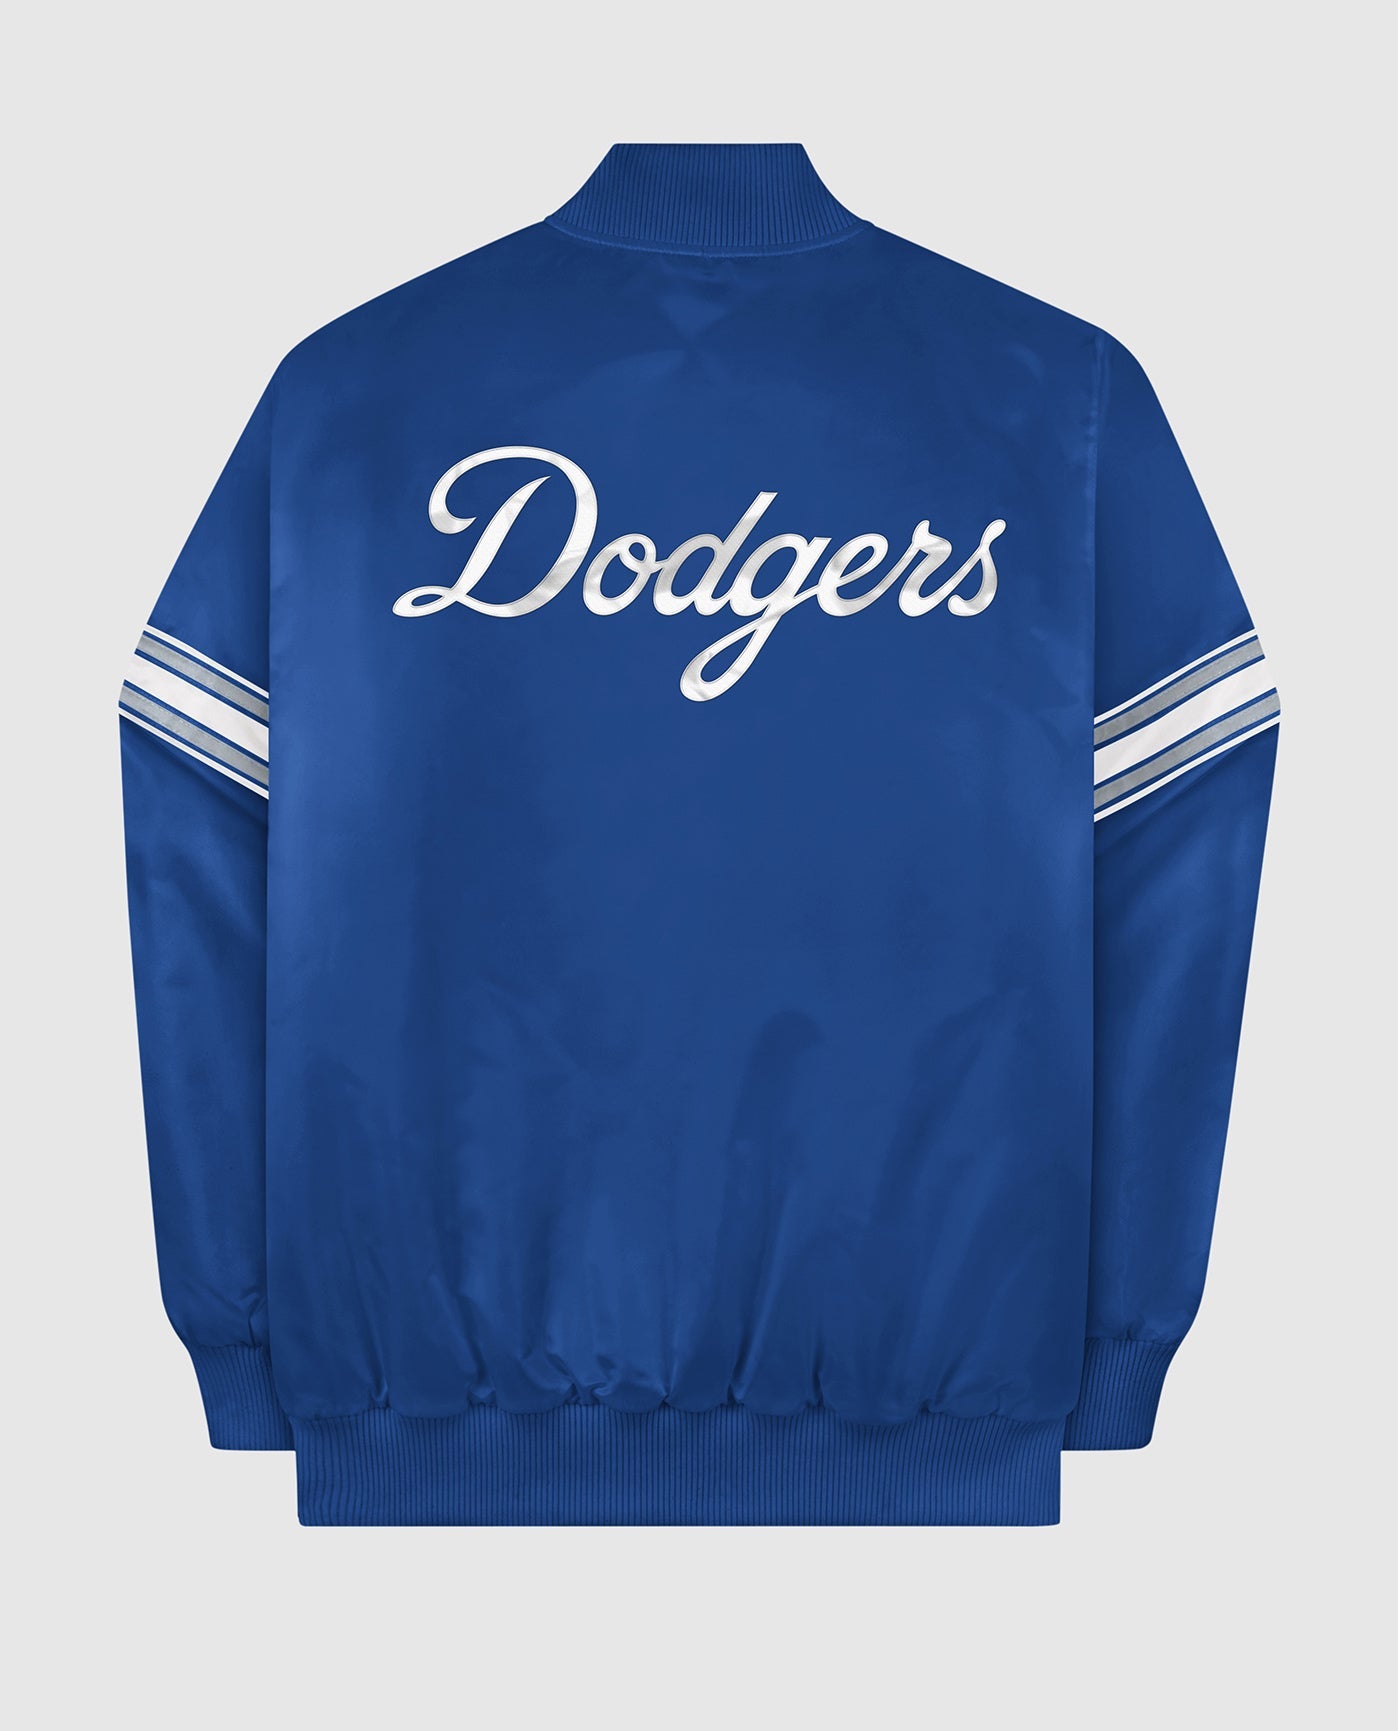 Dodgers Blue